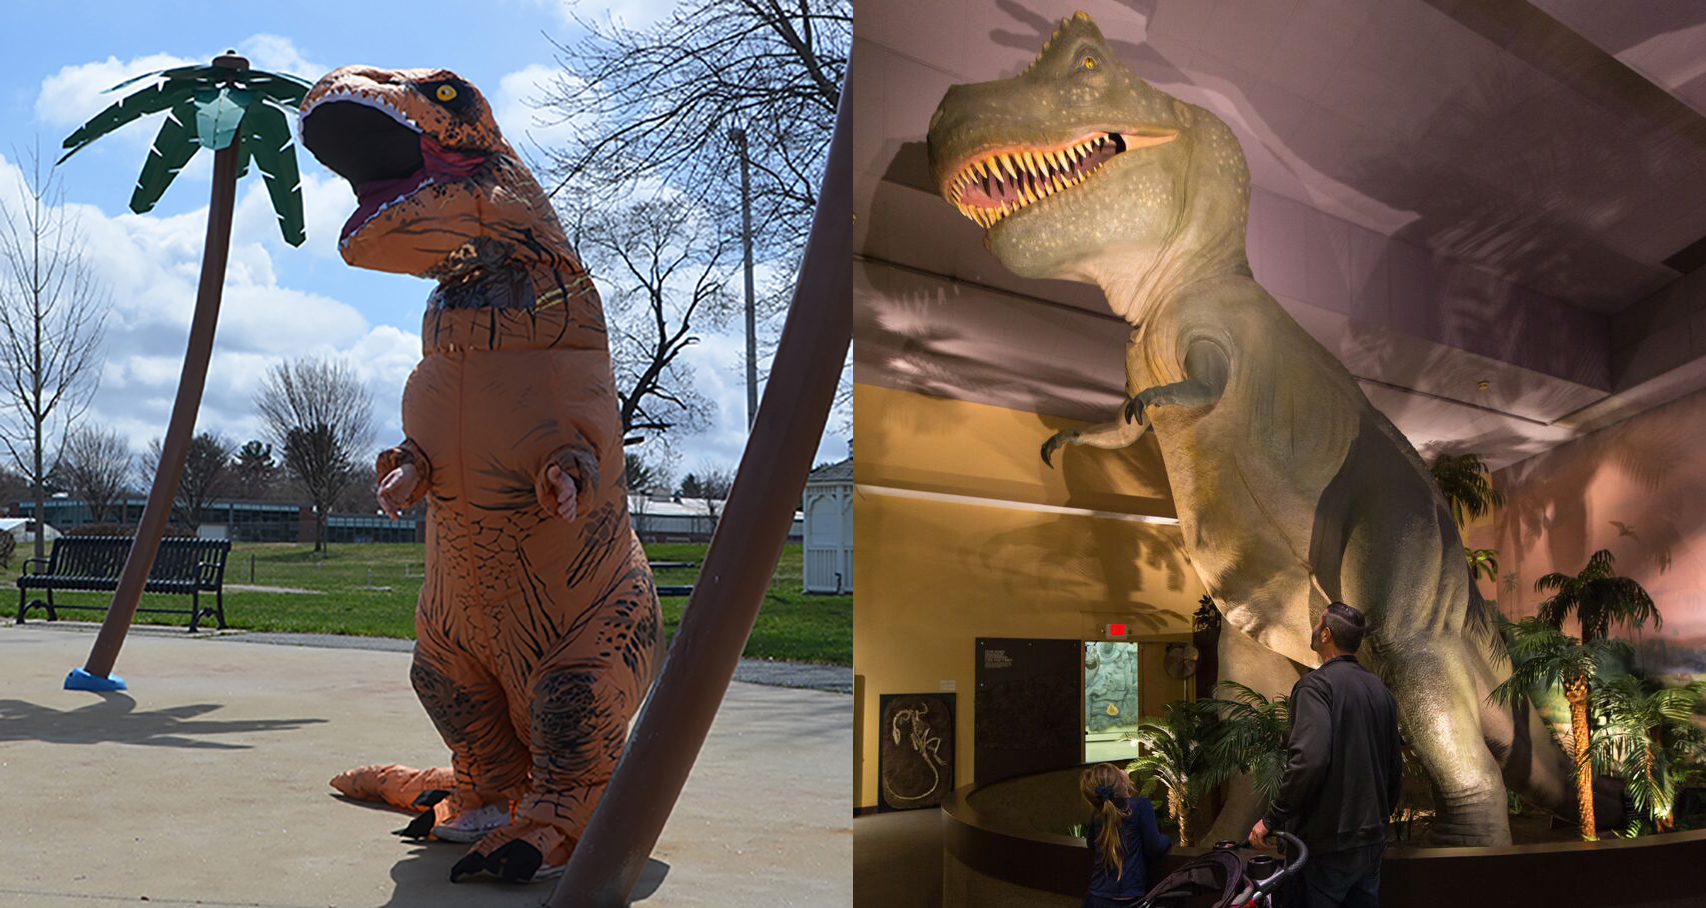 Person in costume imitates T.rex